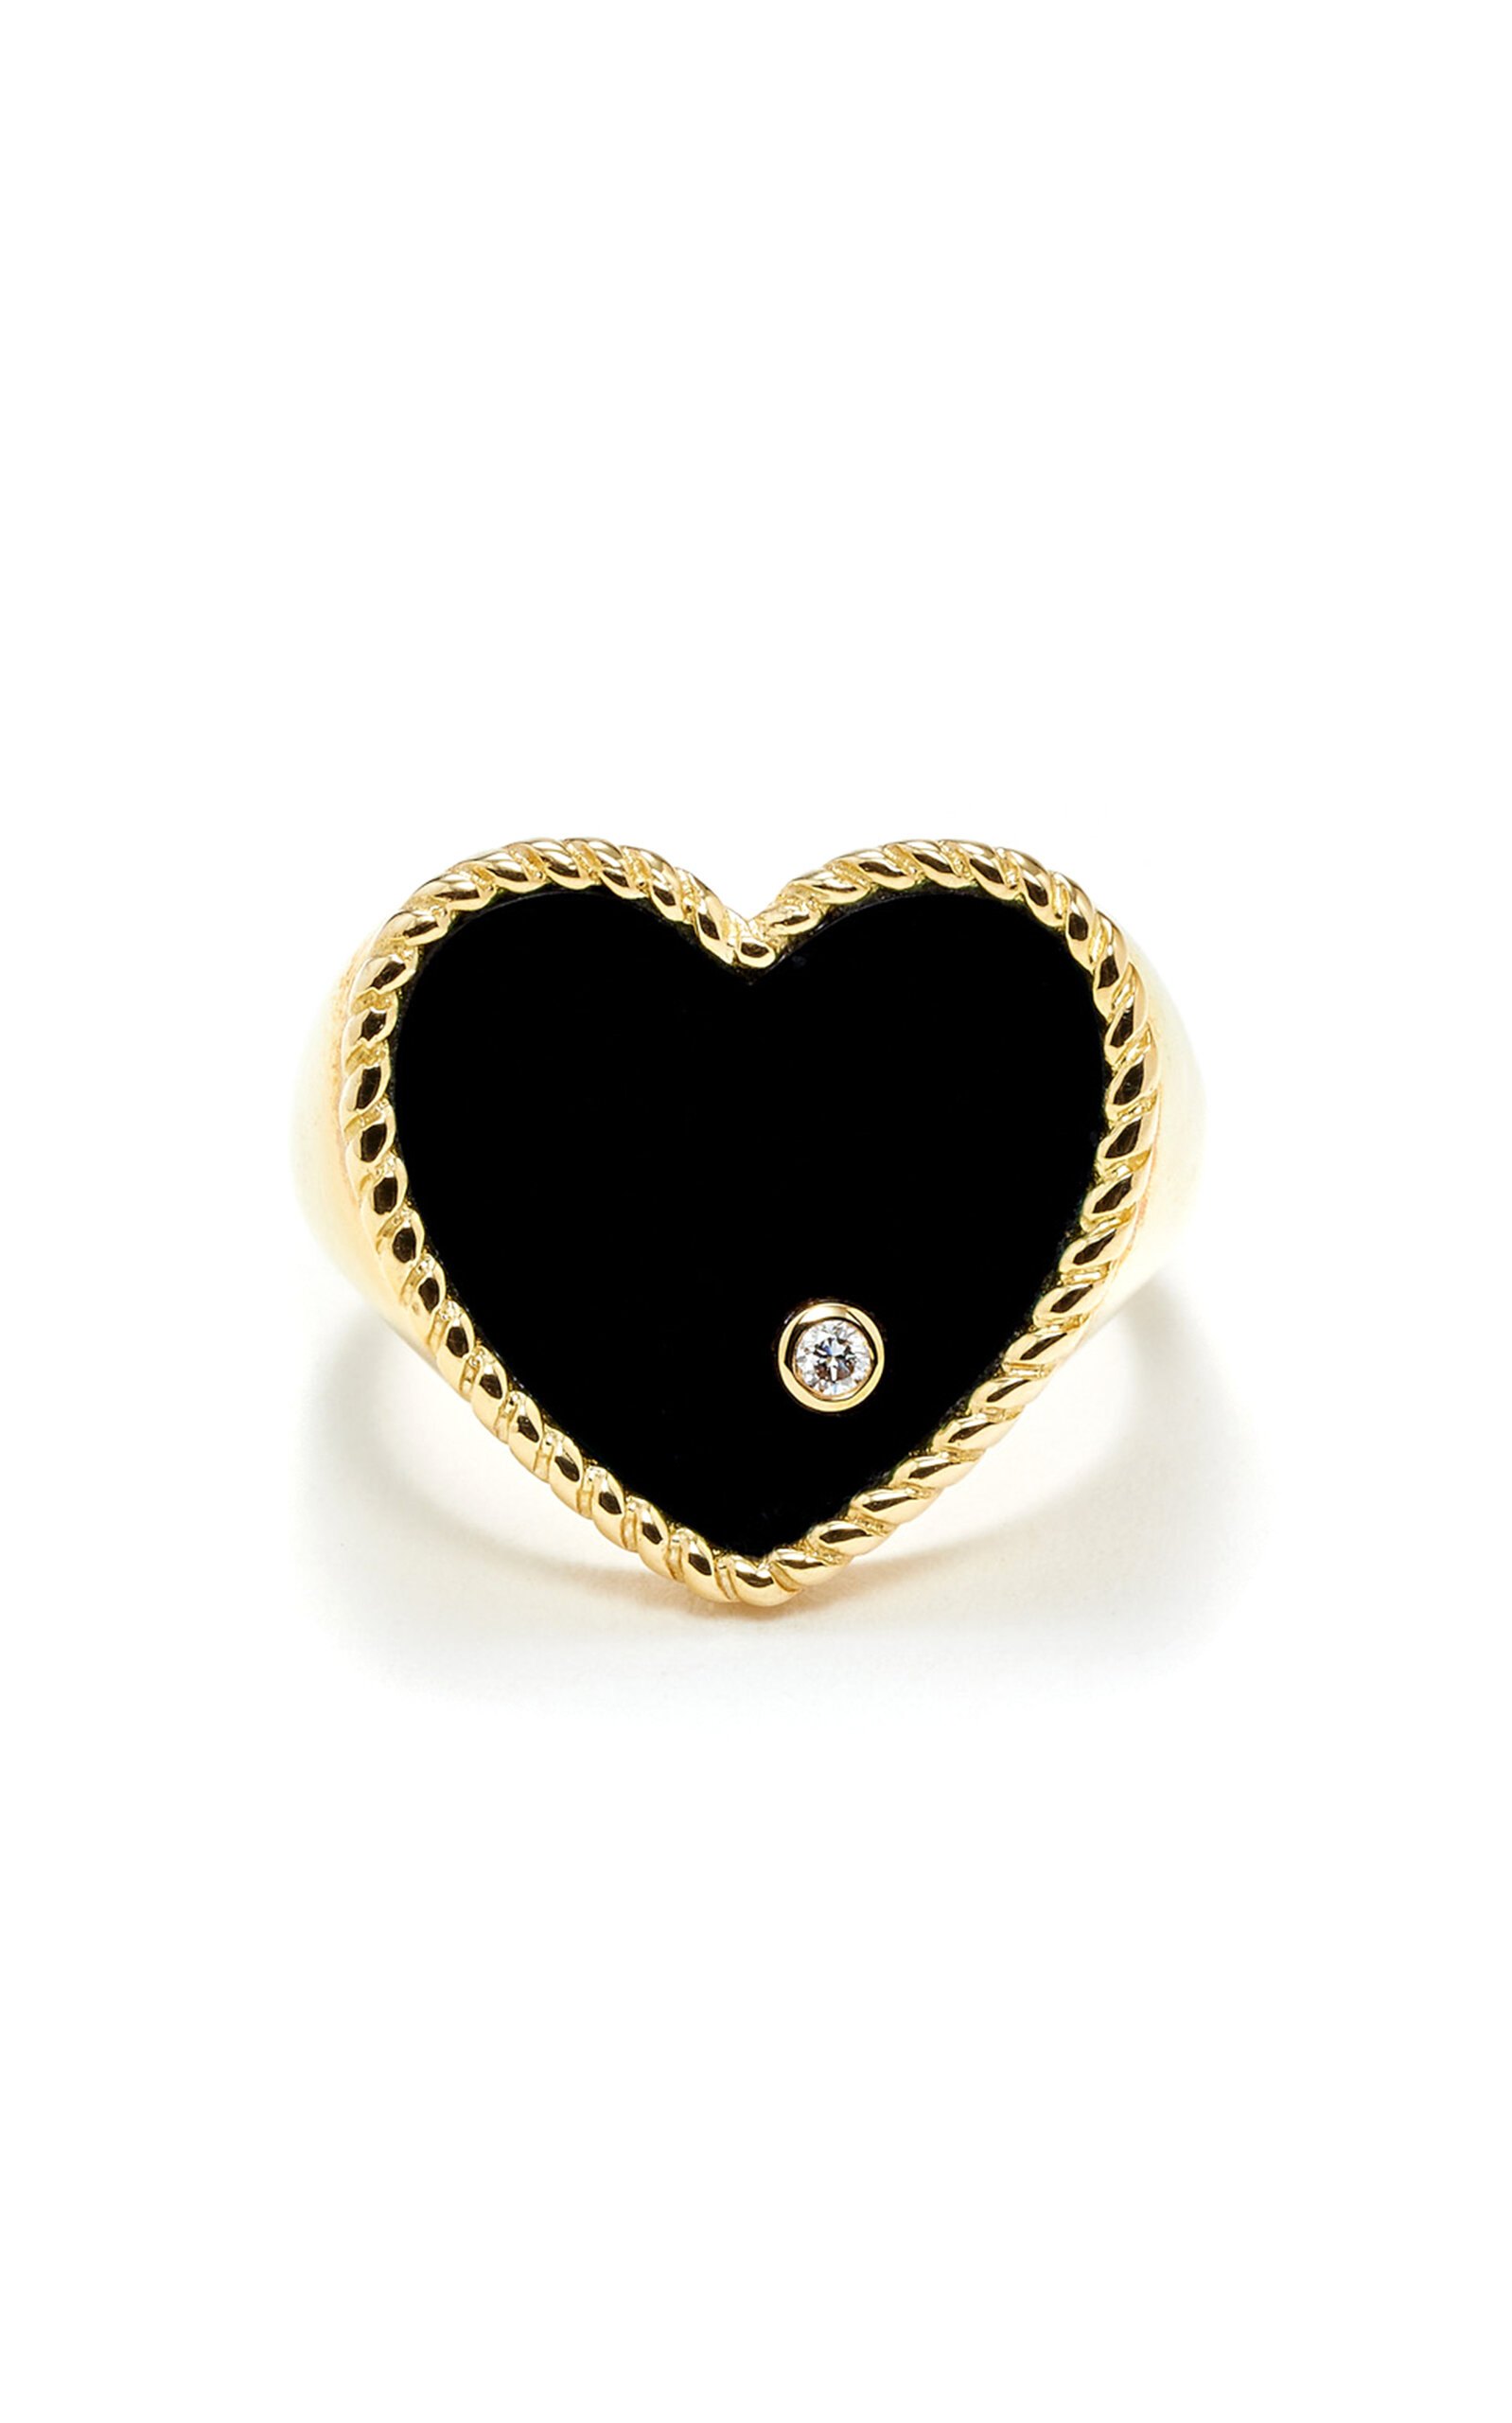 Yvonne Leon Women's 9K Yellow Gold Onyx Heart Signet Ring